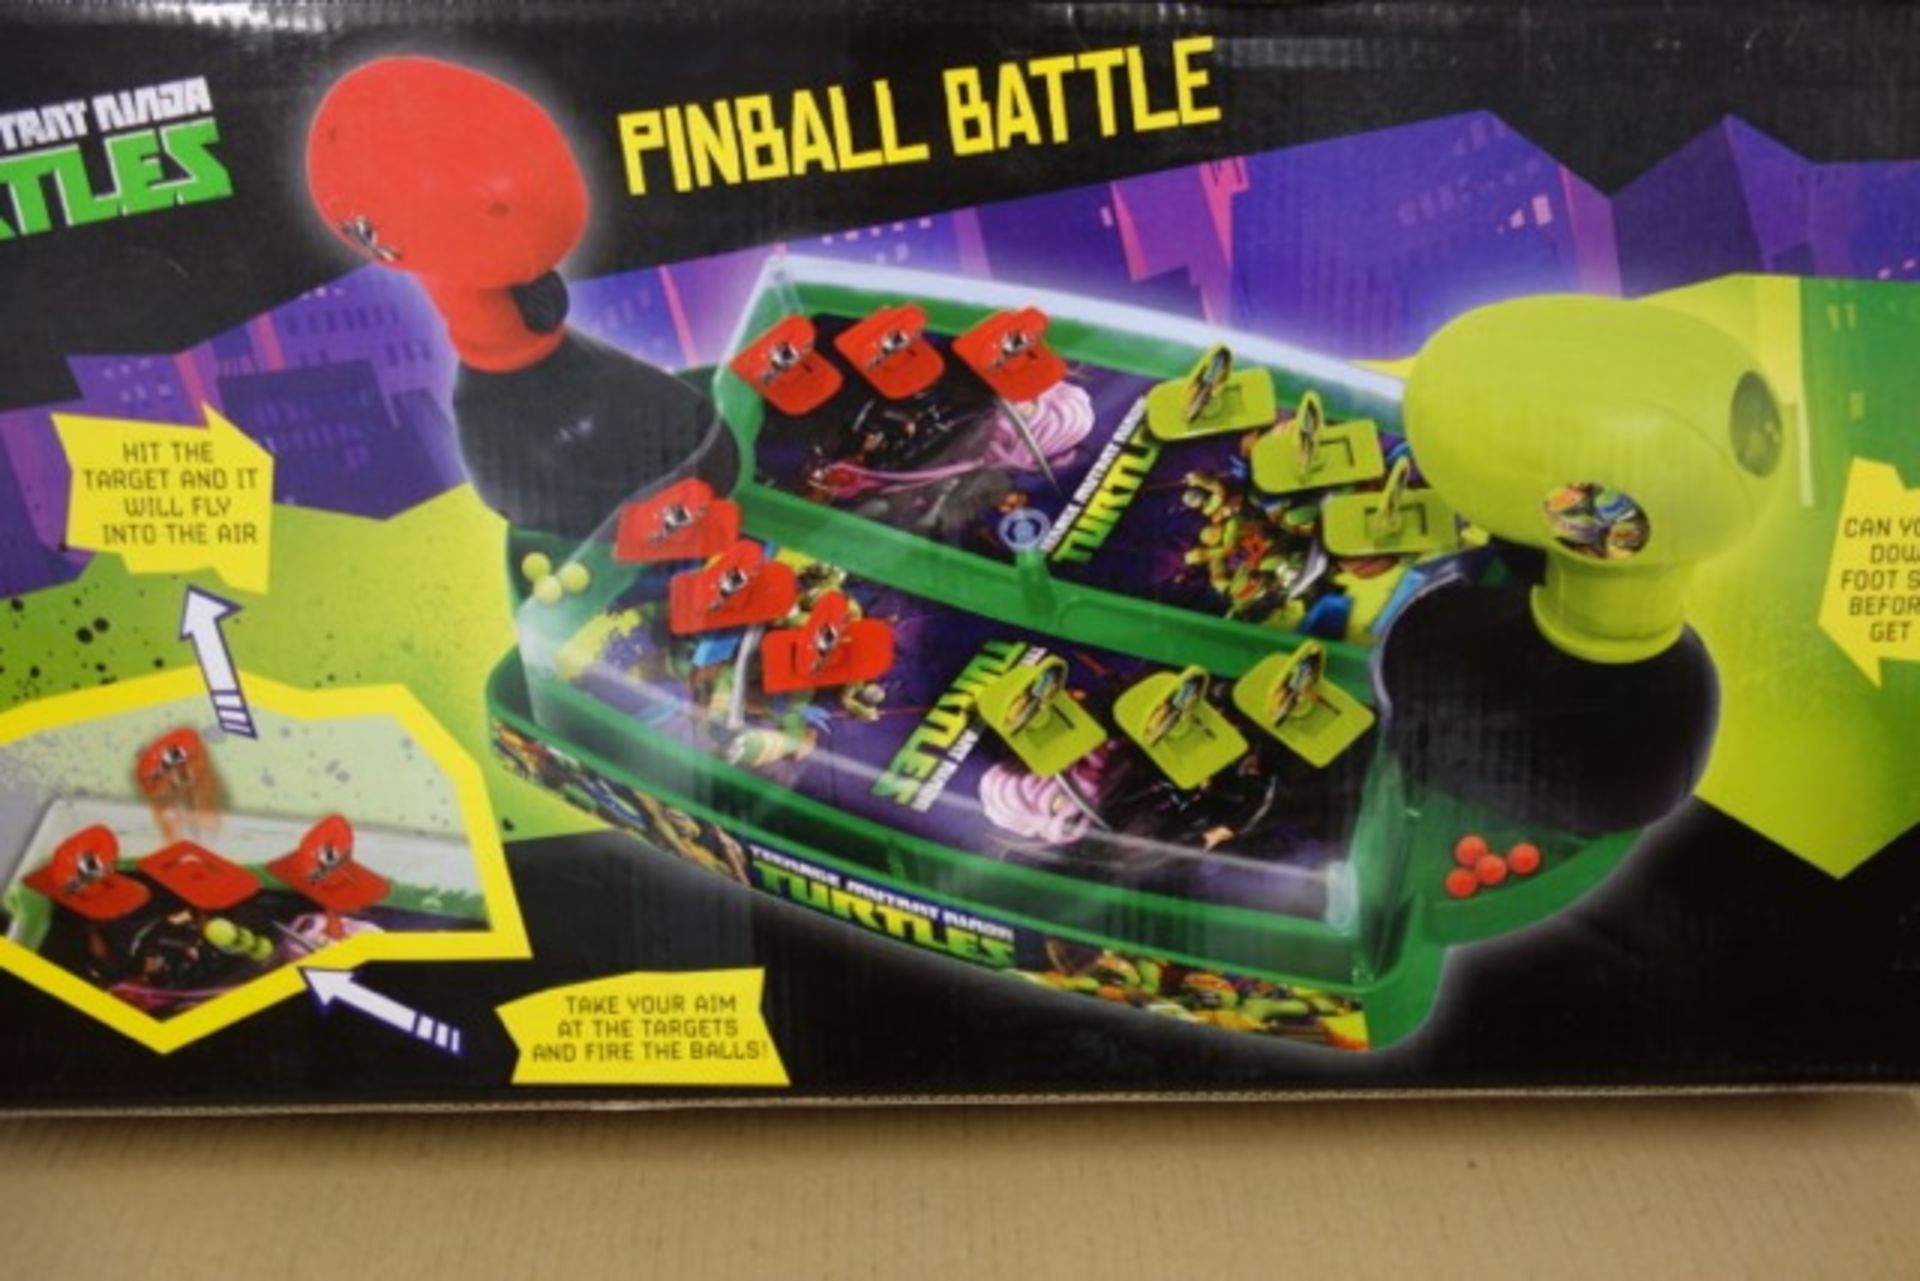 18 x Nickelodeon Teenage Mutant Ninja Turtles Pinball Battle Game. 'Take your aim at the targets and - Image 3 of 3